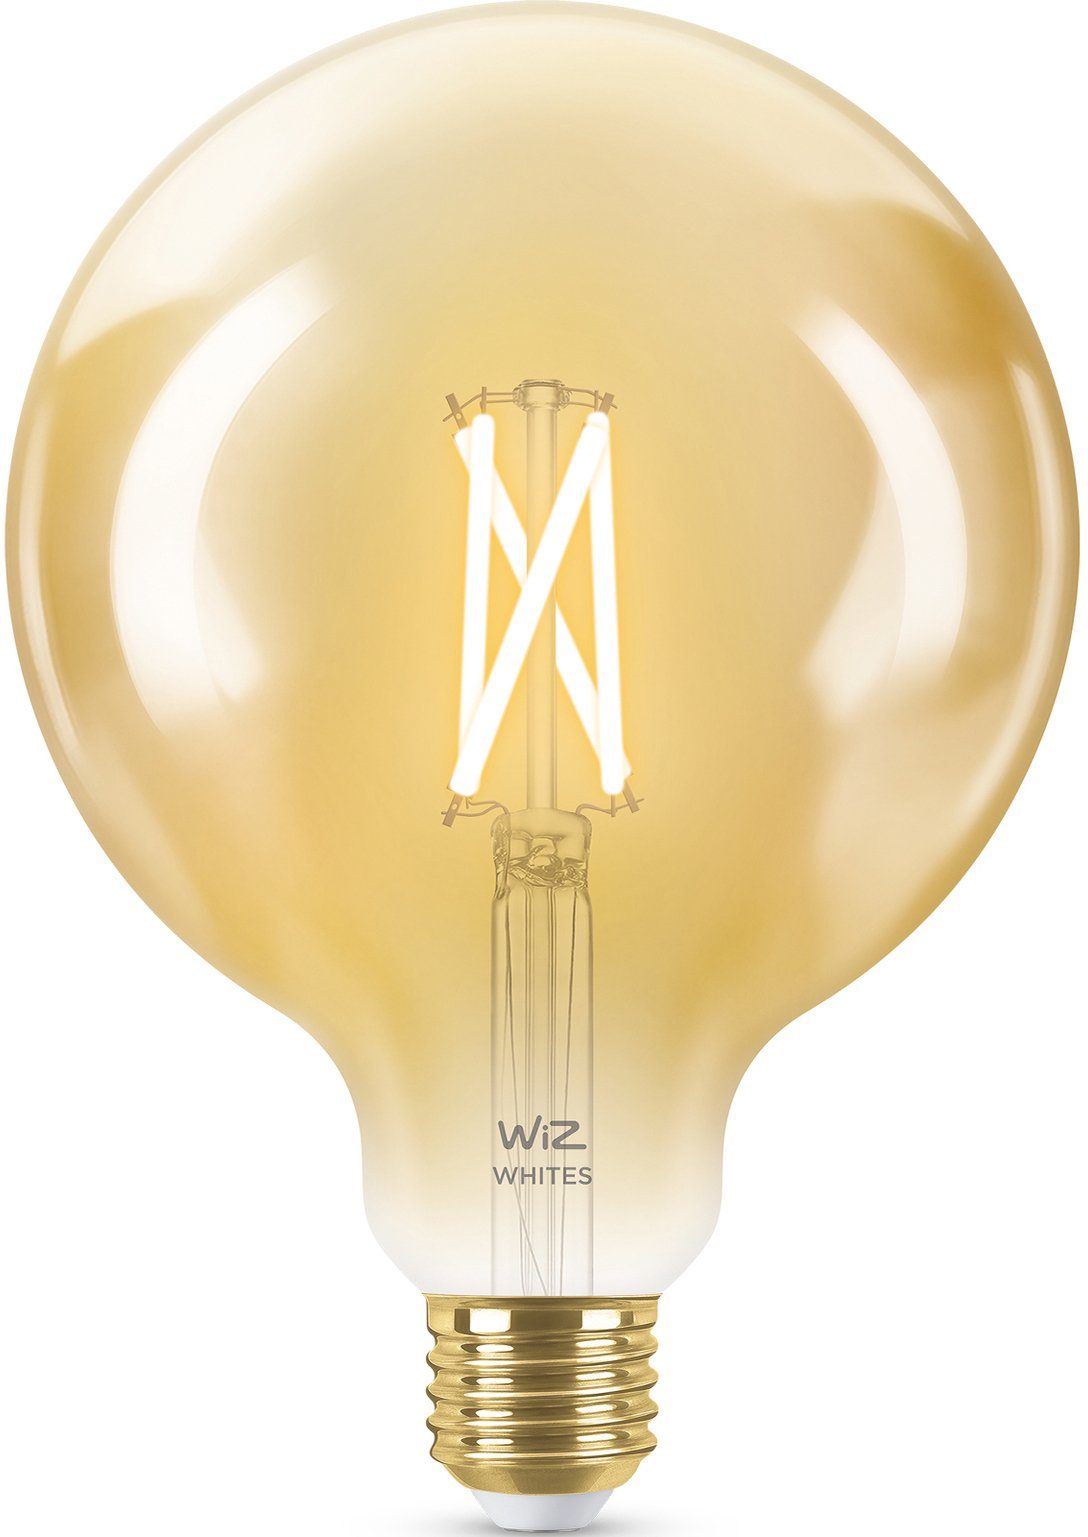 WiZ LED-Filament Filament 50W E27 Globeform G125 Amber Einzelpack, E27, 1 St., Warmweiß, Wiz Tunable White Filament LED Lampen für klassisches Vintage-Design